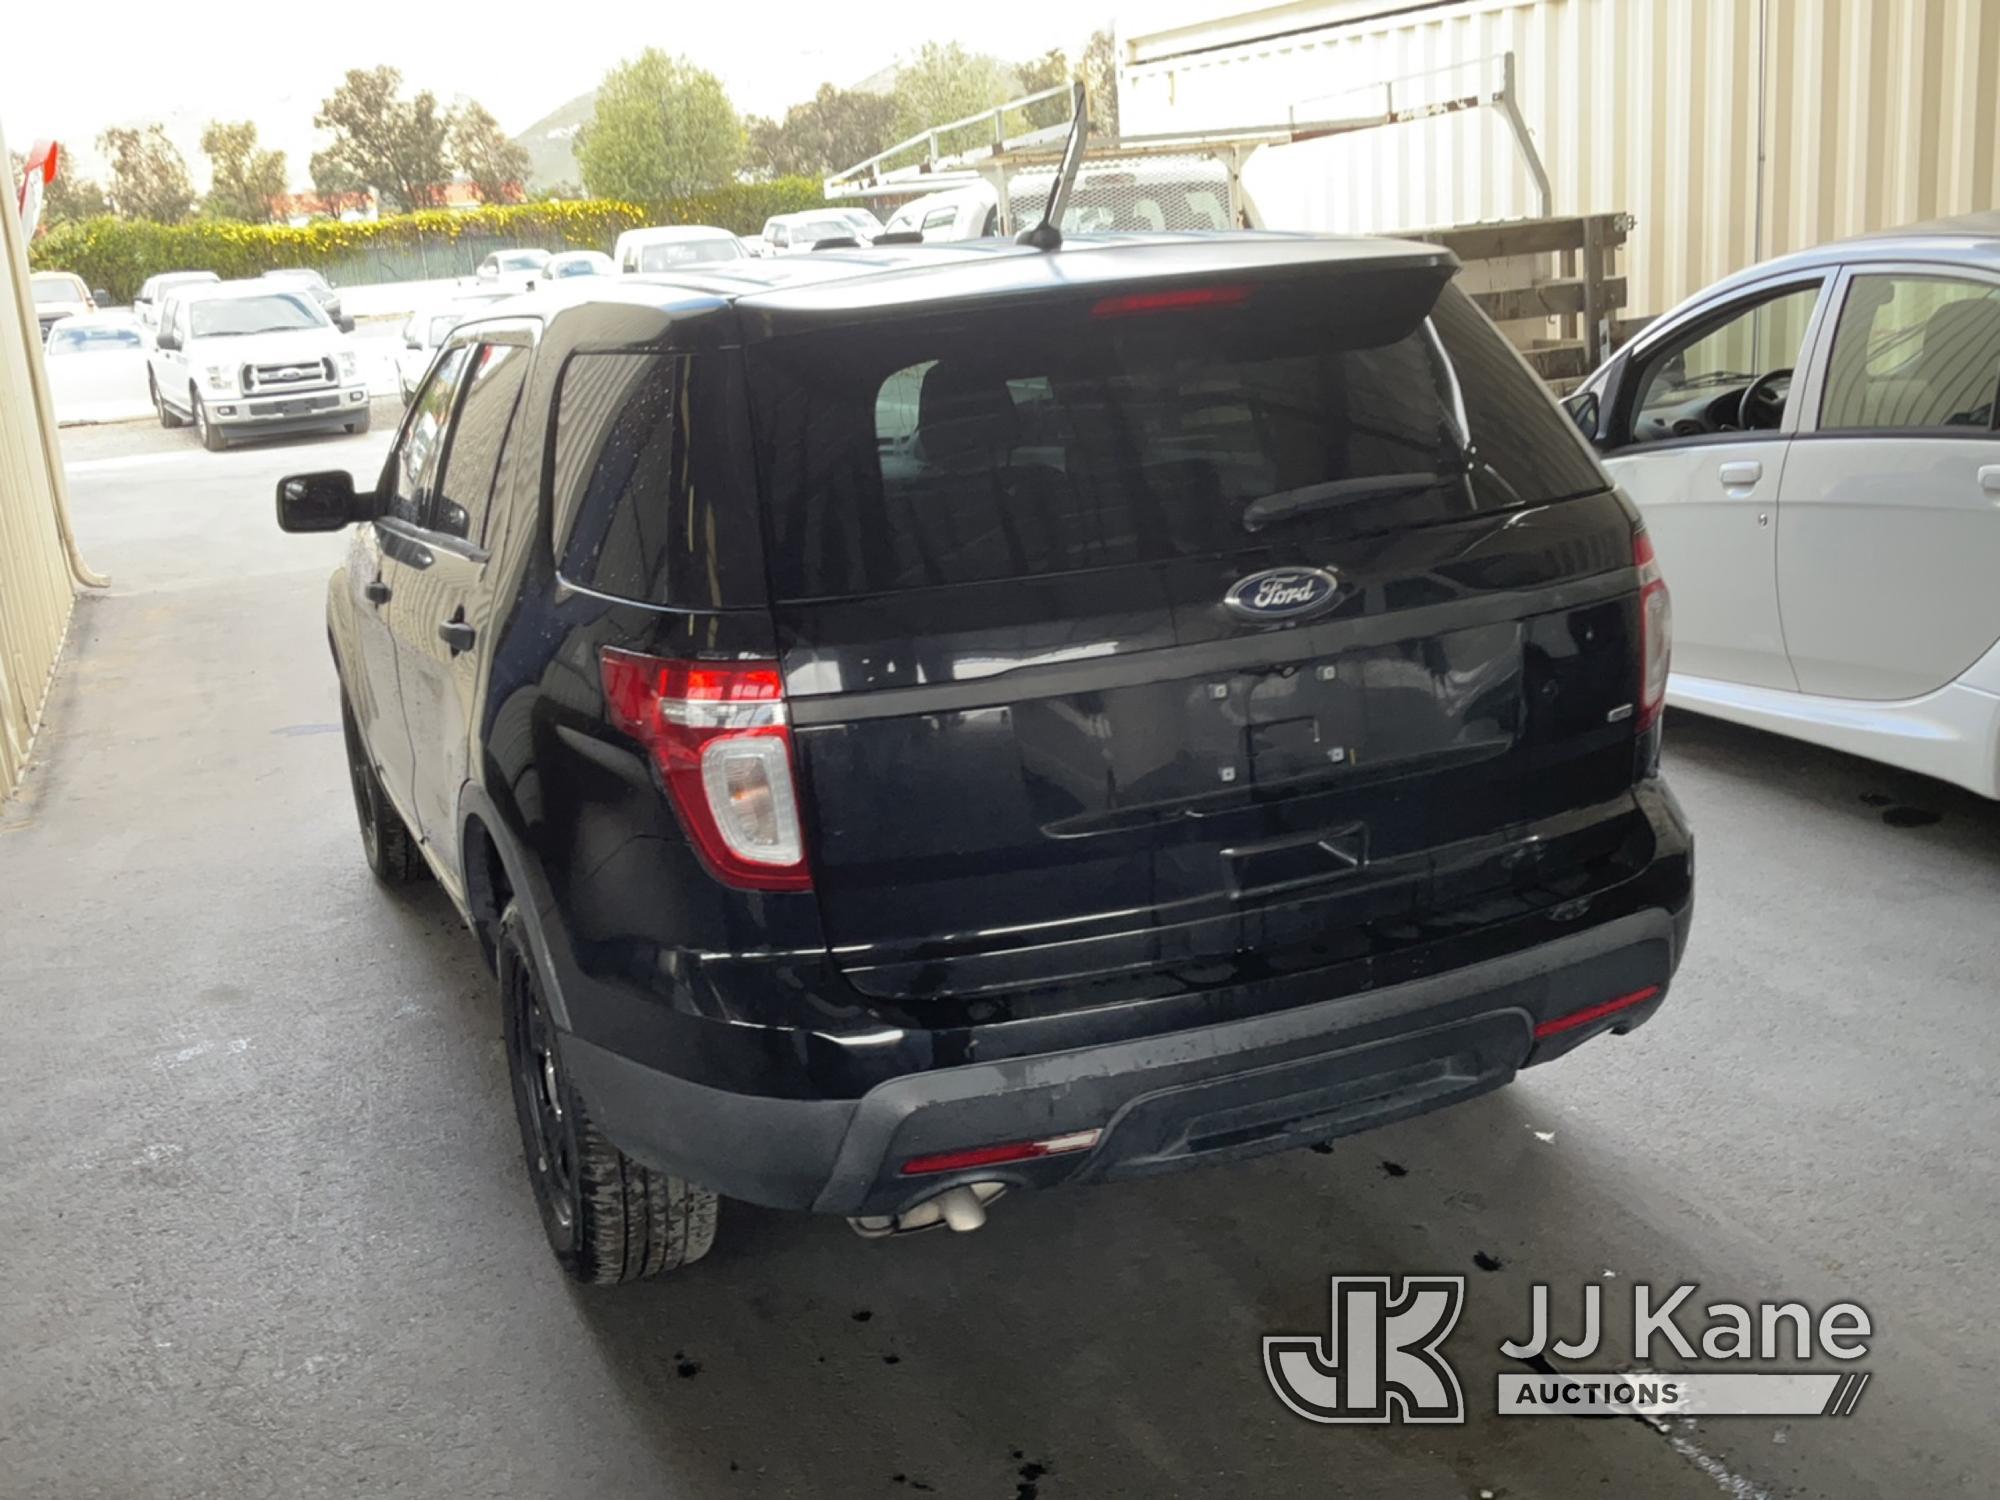 (Jurupa Valley, CA) 2015 Ford Explorer AWD Police Interceptor Sport Utility Vehicle Runs & Moves, Op